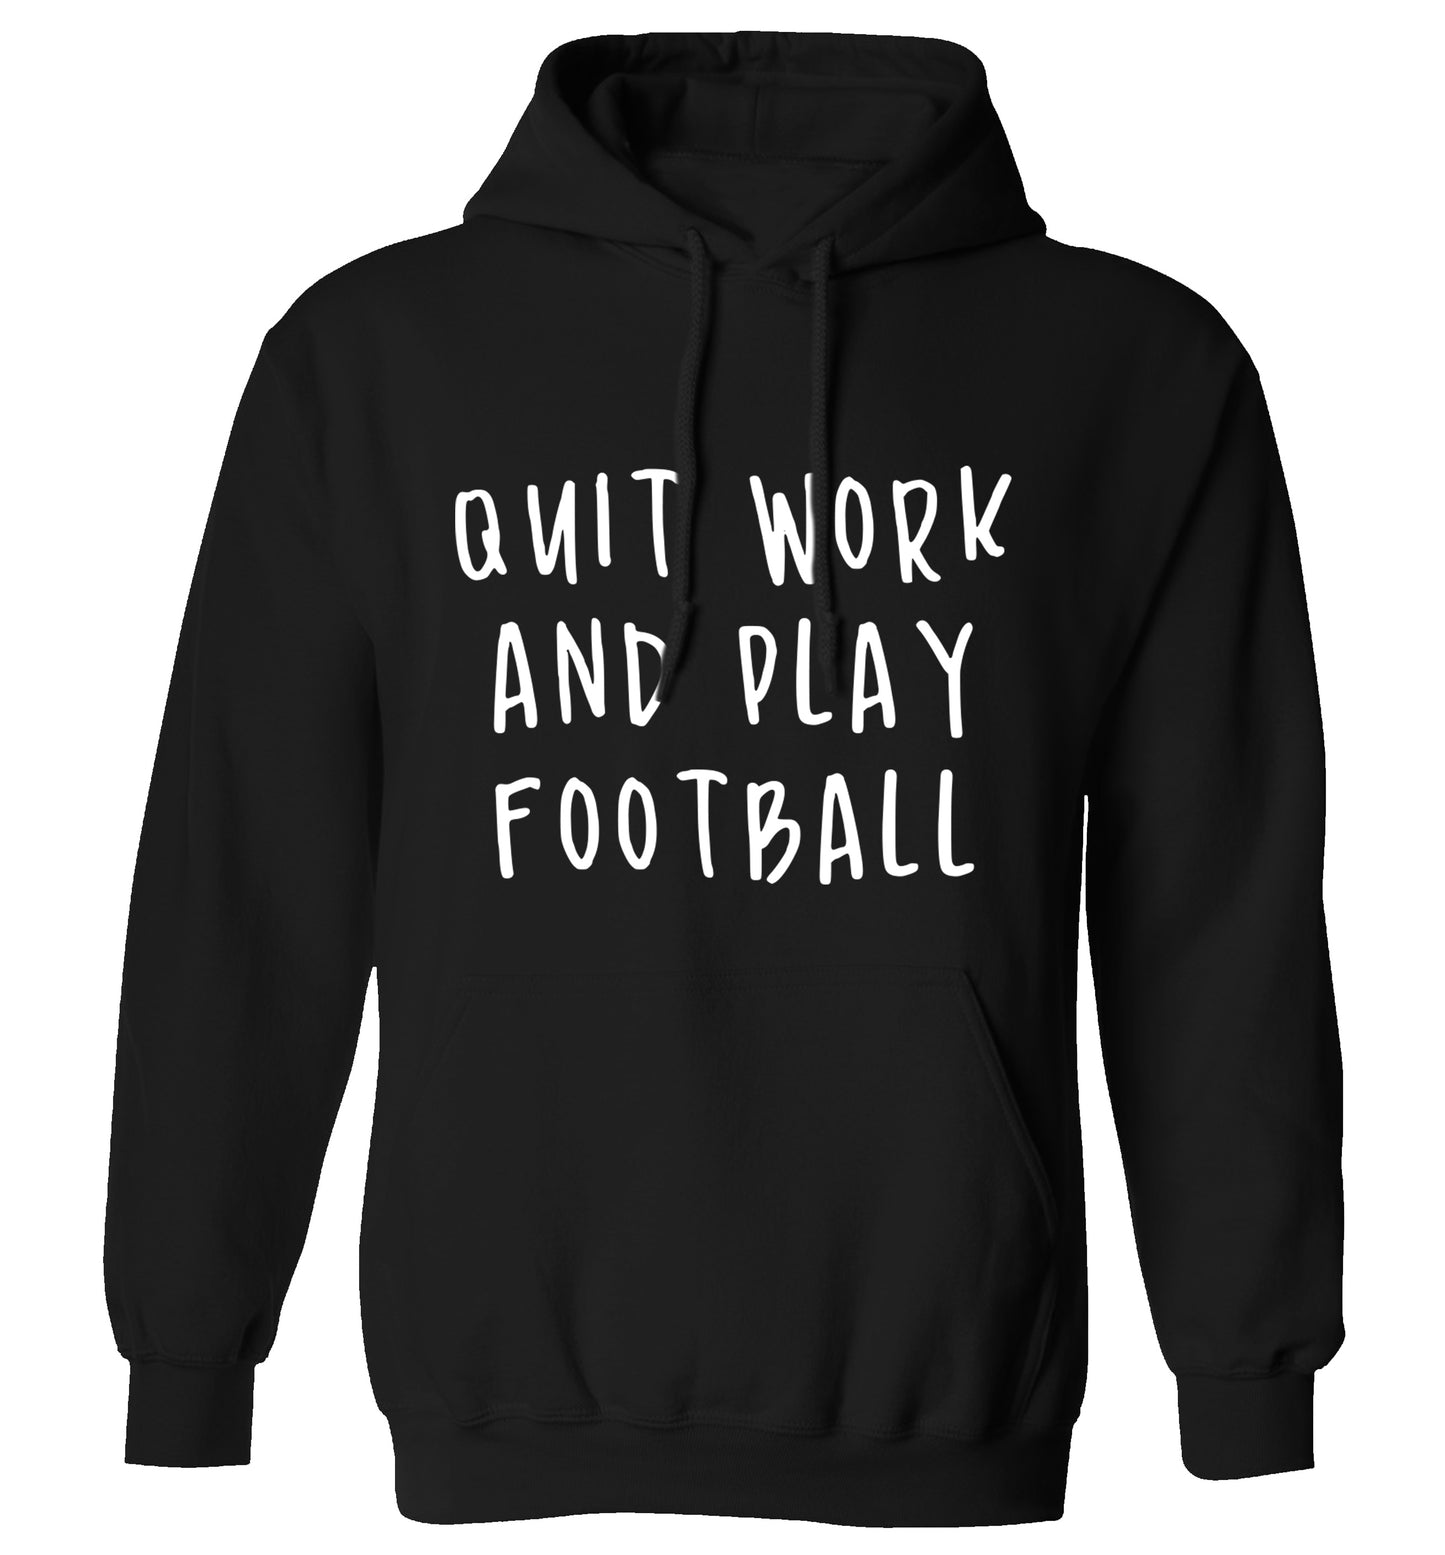 Quit work play football adults unisexblack hoodie 2XL